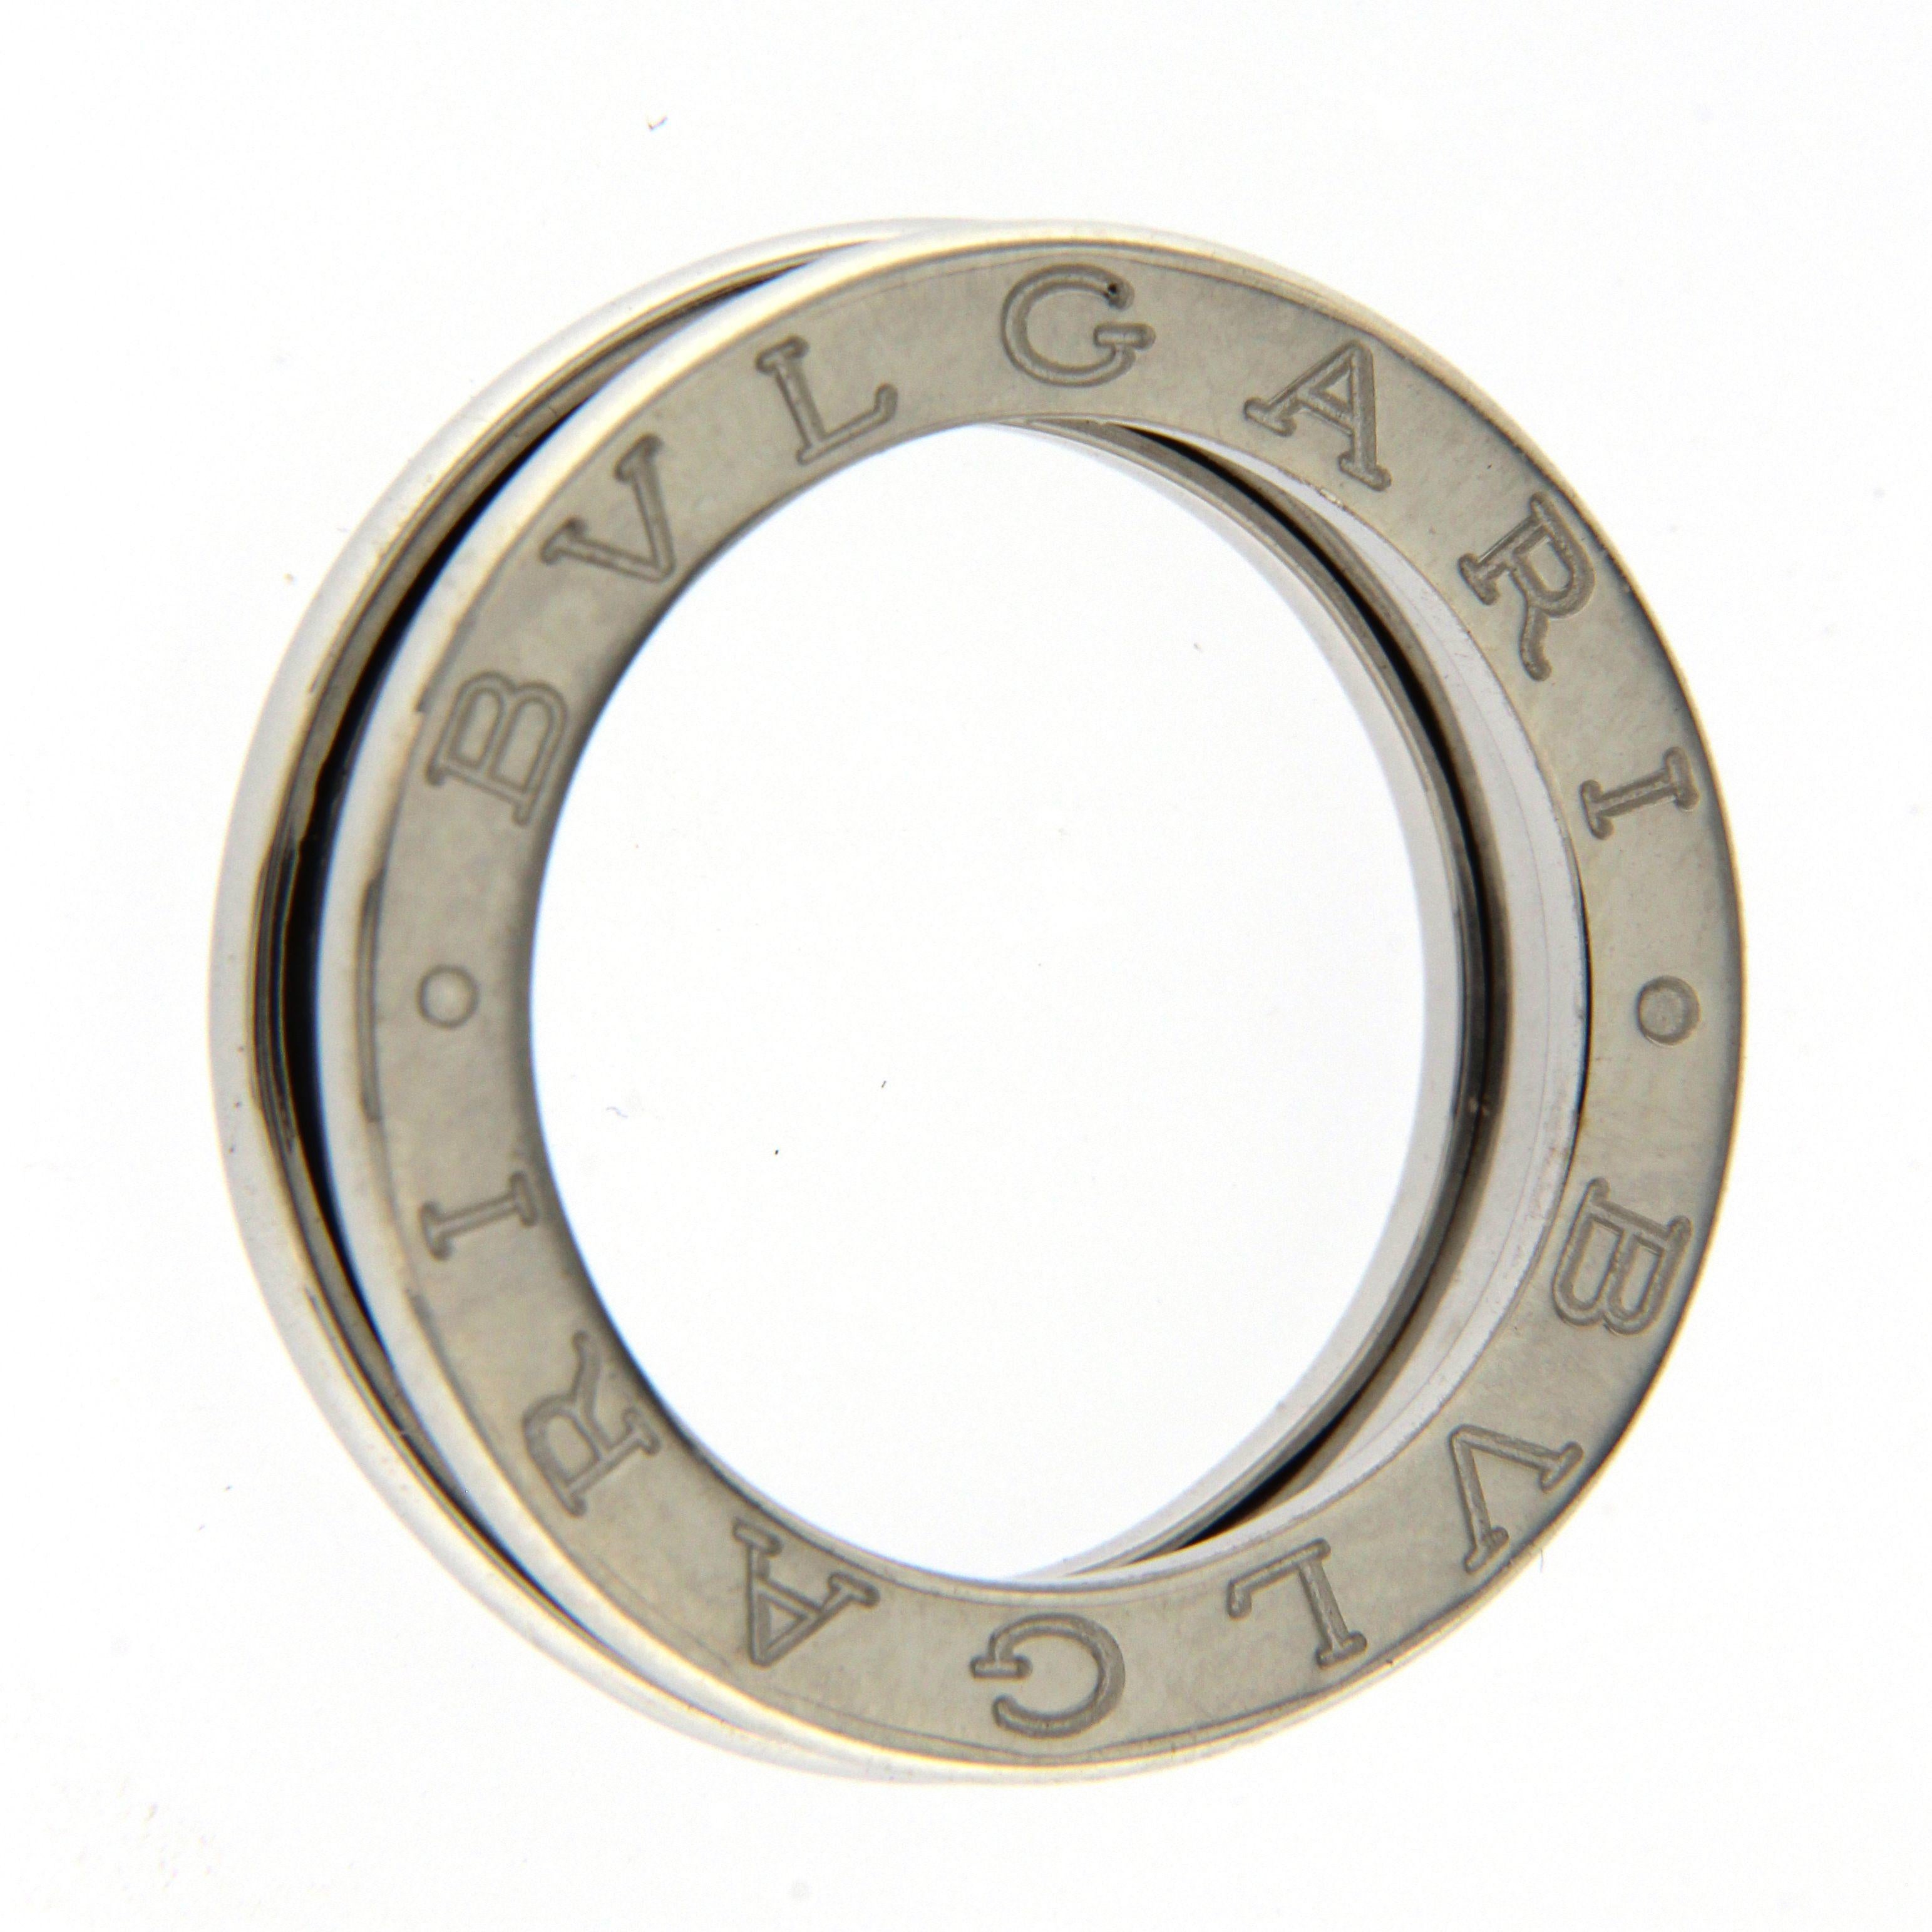 BZERO1 ring 18kt white gold       size 51       1 Band